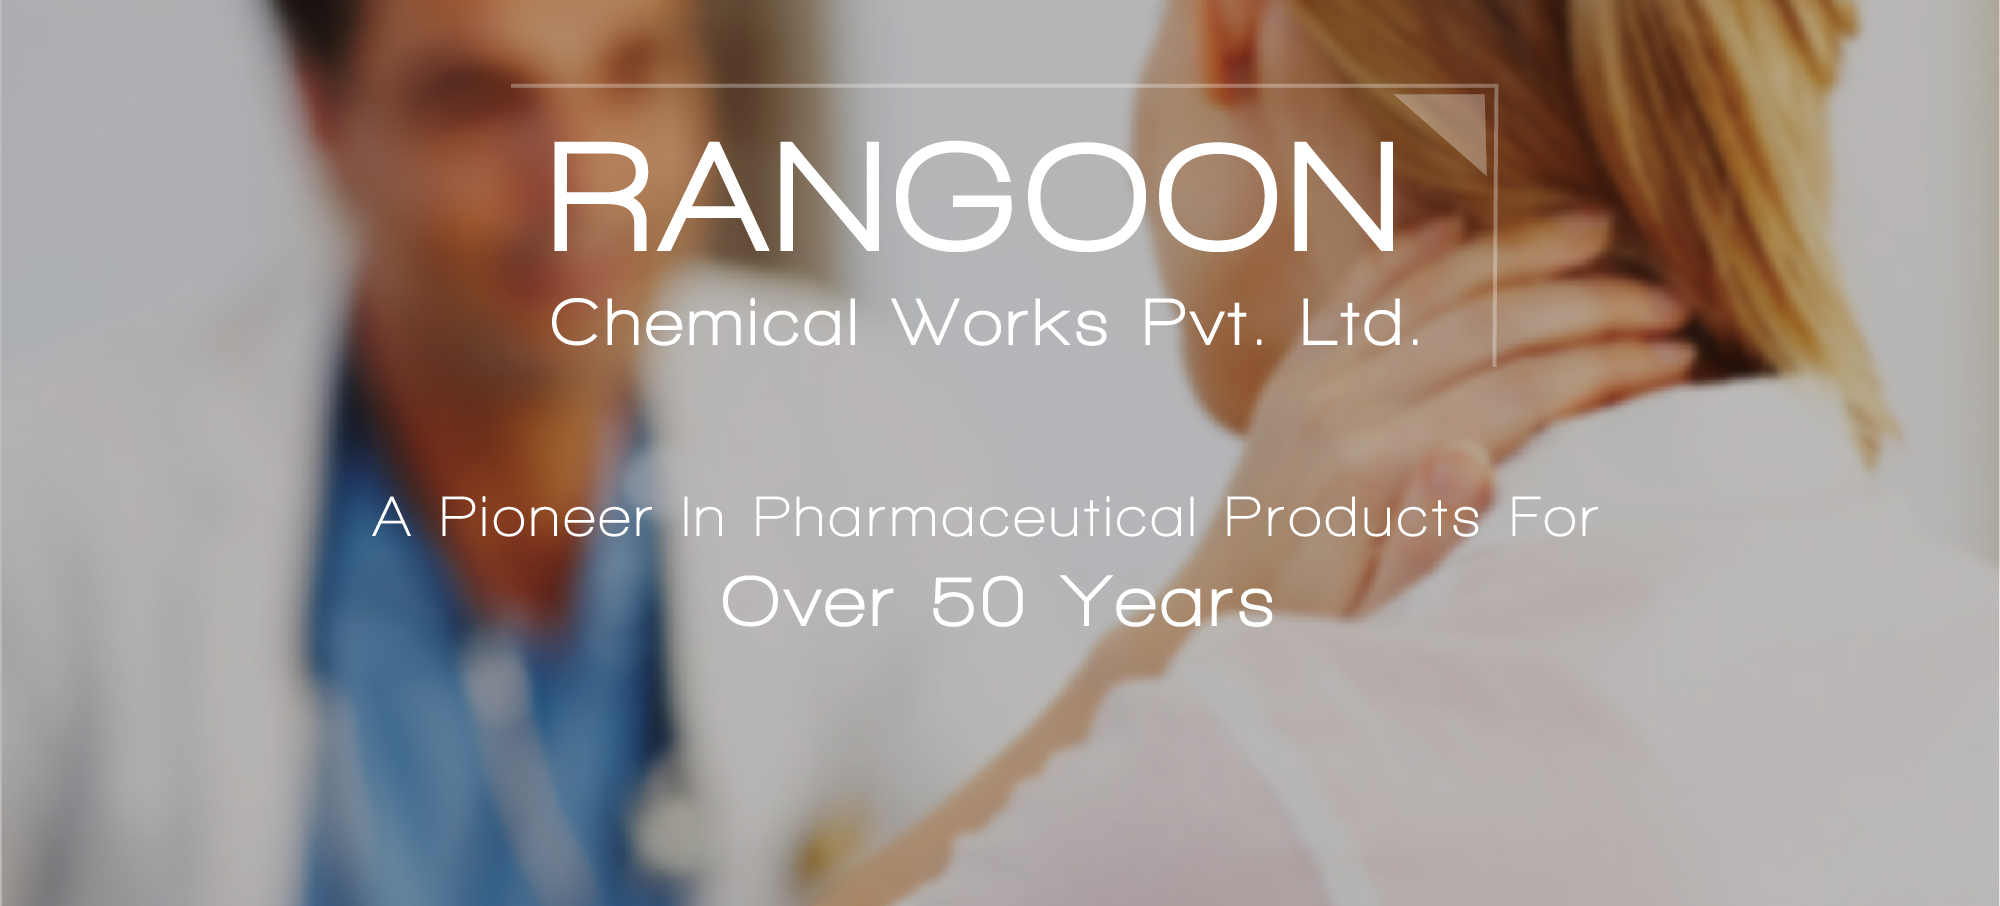 Rangoon Chemicals - Manufacturer of Balm, Flying Balm, Flying Tiger Cub Balm, Oil Balm Ayurvedic Medicines, Tonics & Drugs